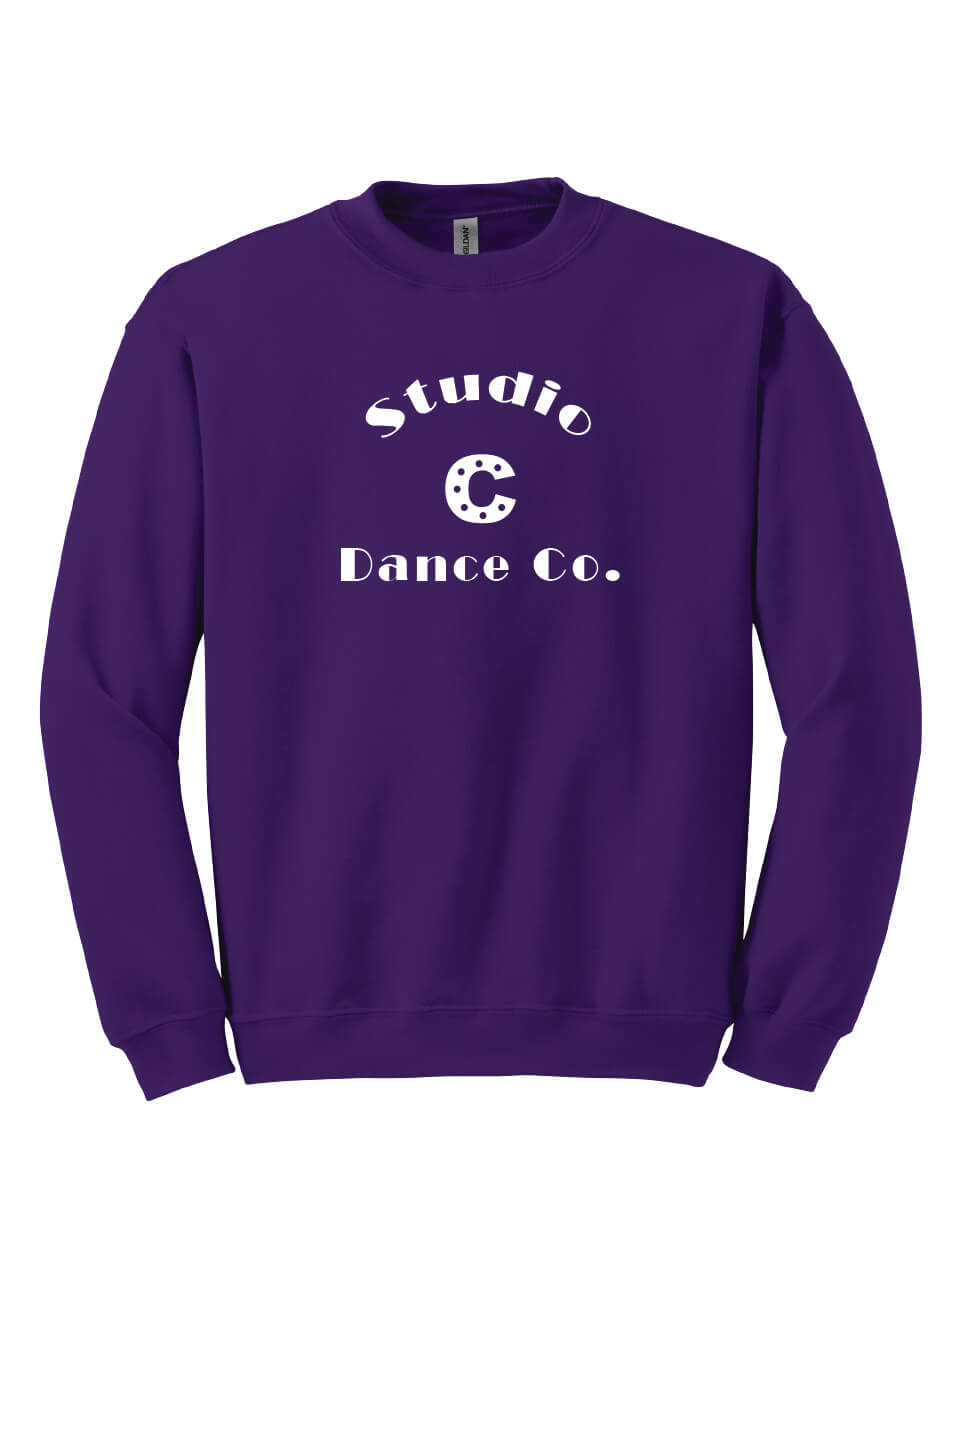 Studio C Crewneck Sweatshirt (Youth) purple